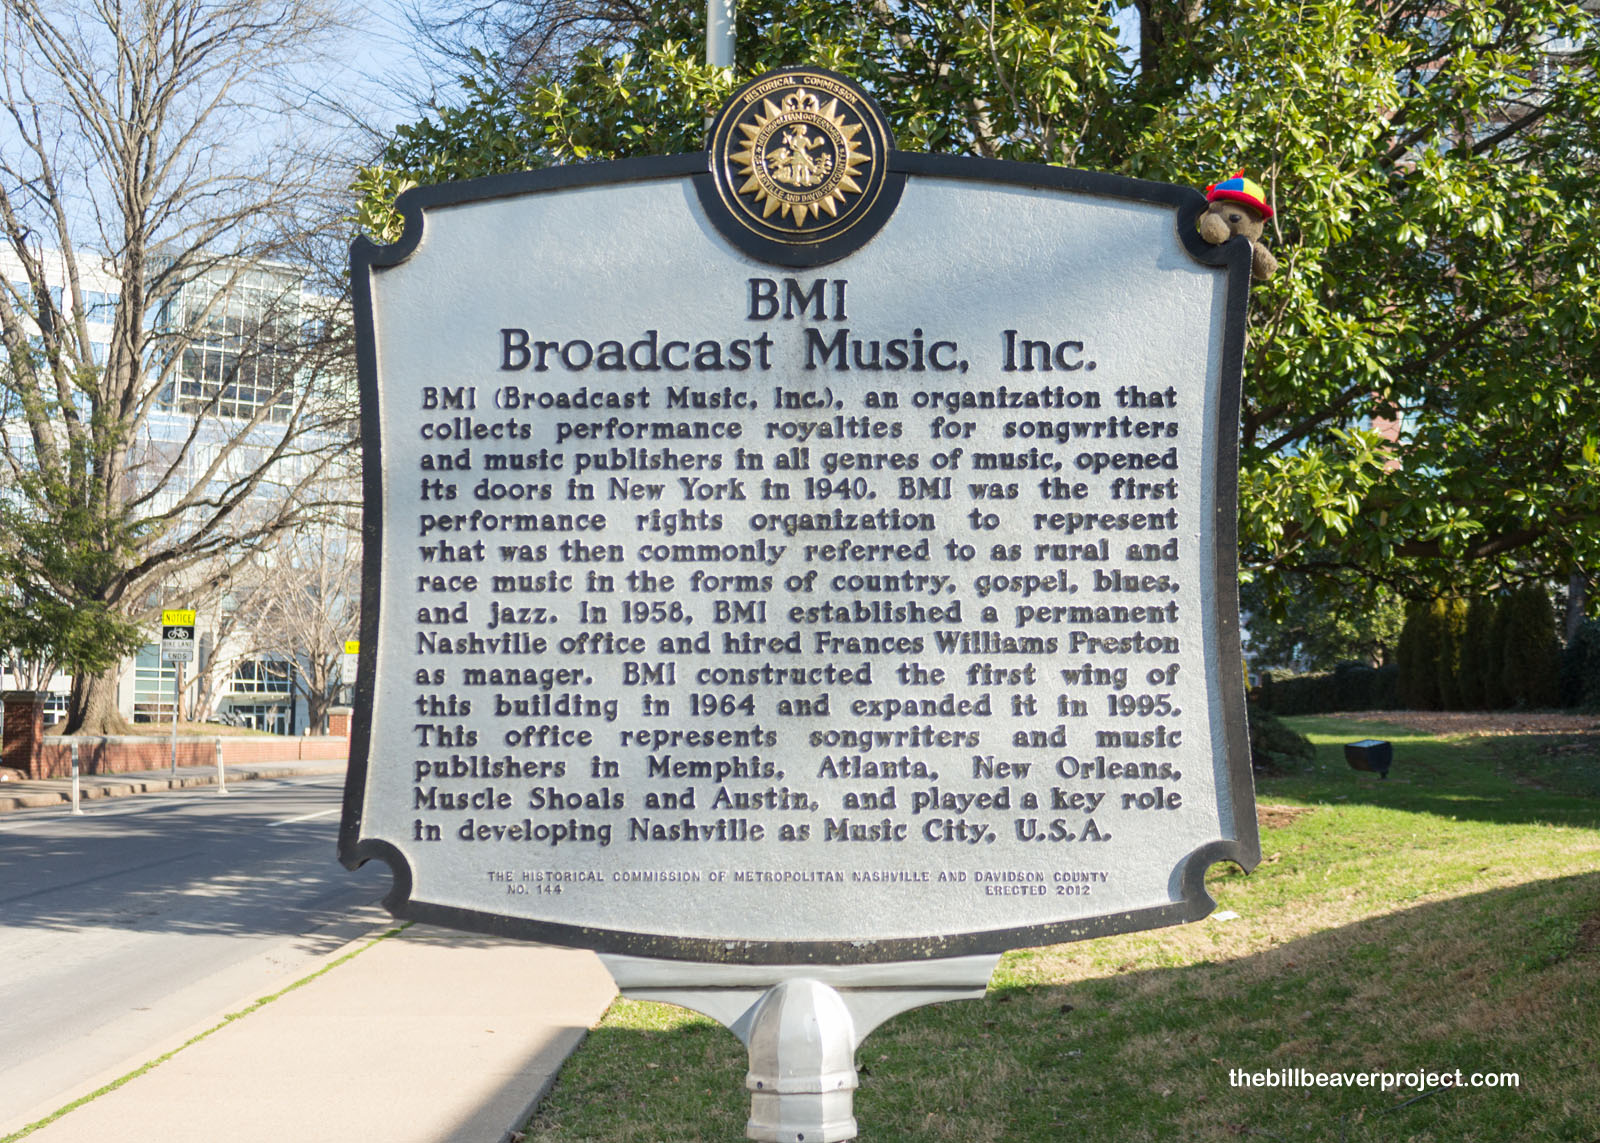 BMI: Broadcast Music, Inc.